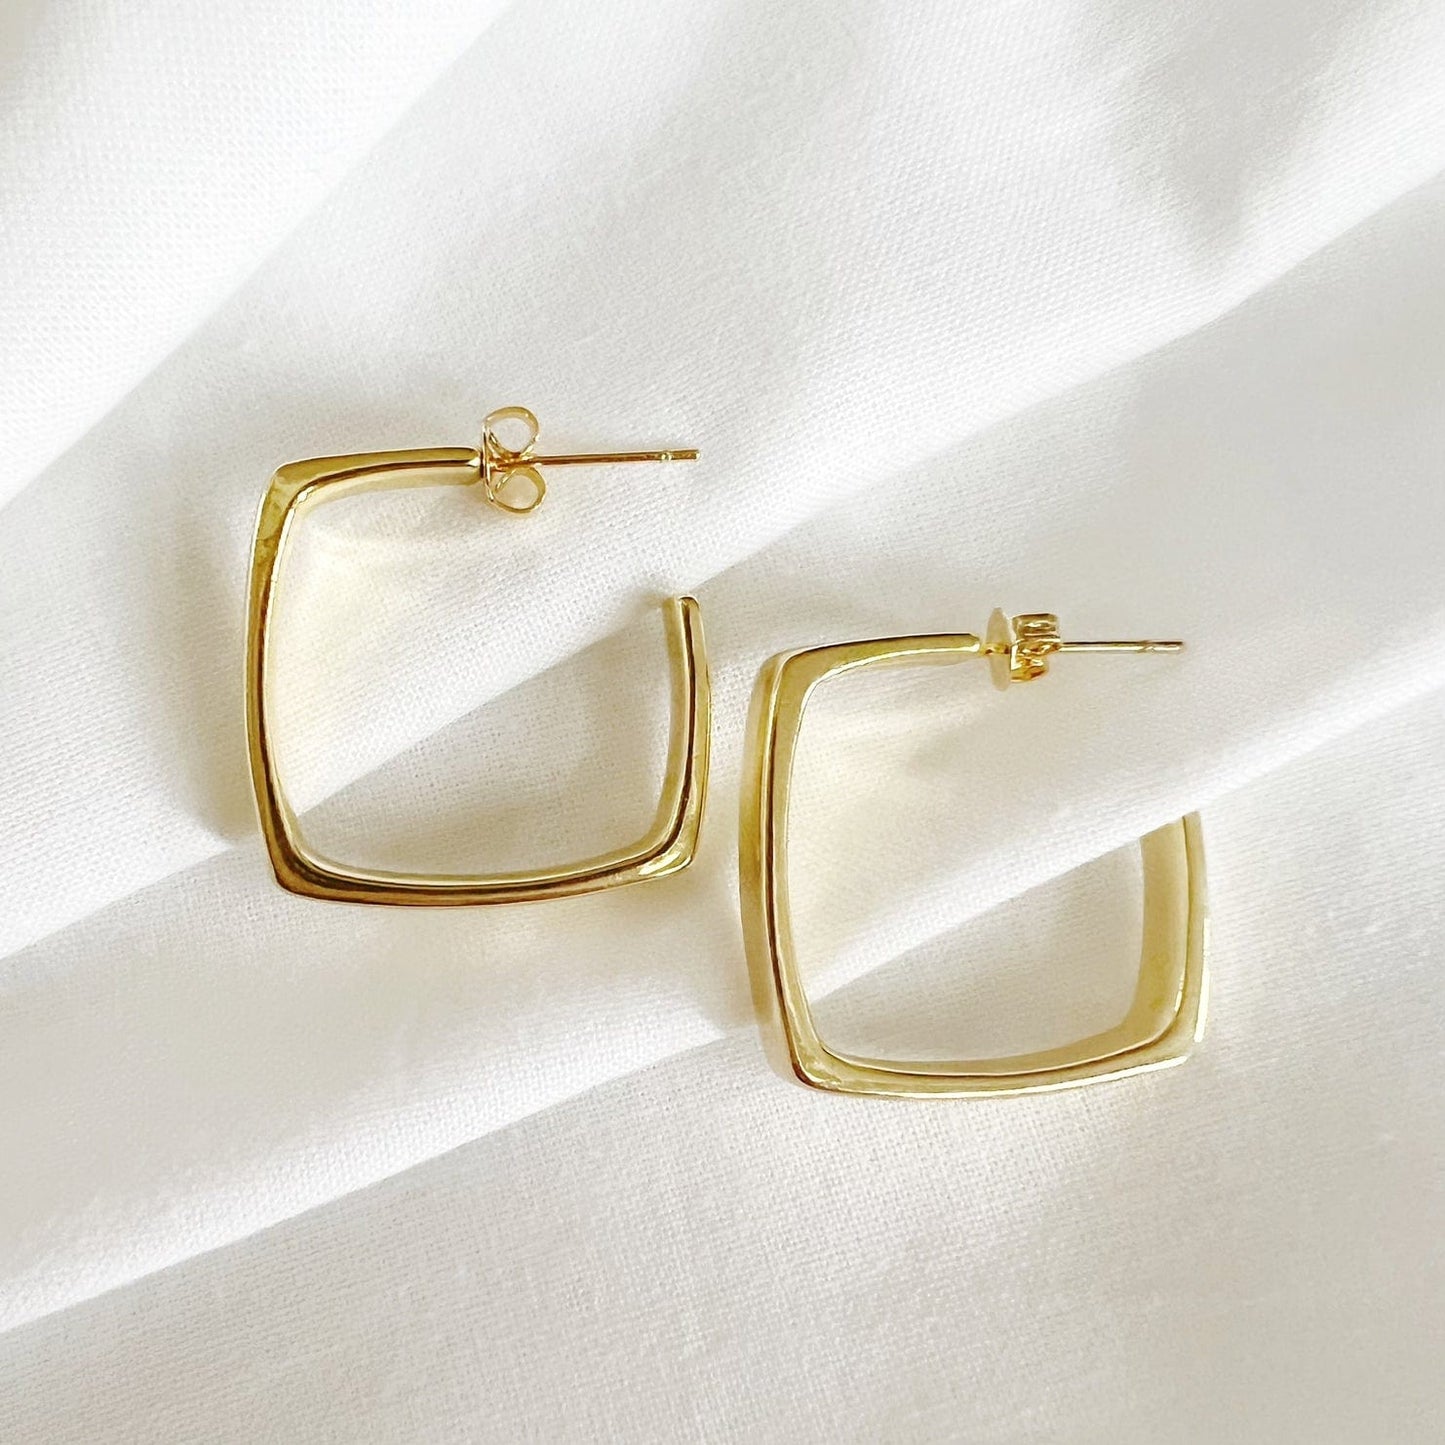 EAR-GF Aries Geometric Square Gold Filled Hoops Earrings